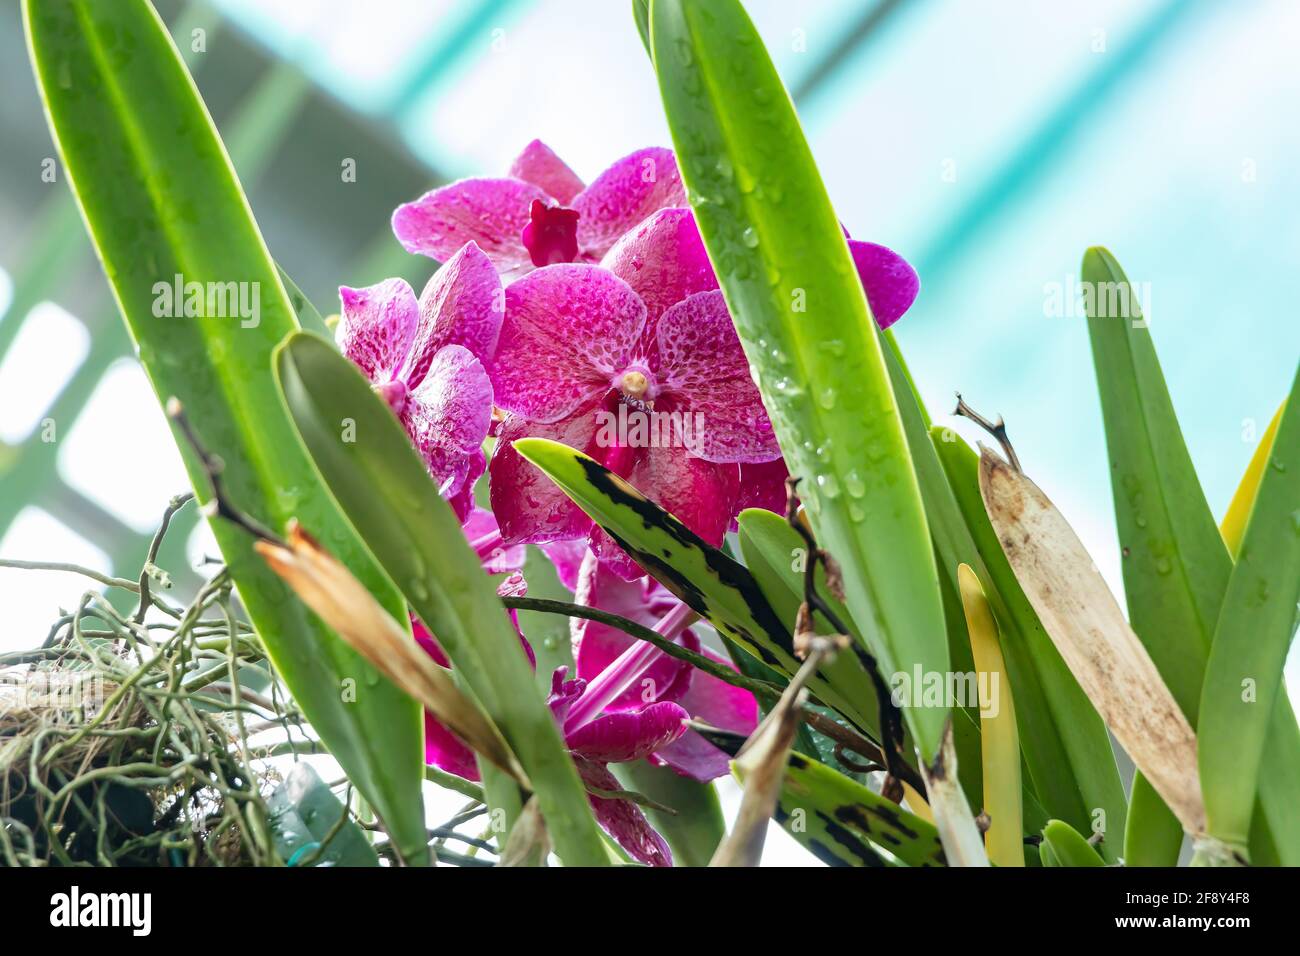 Ascocenda princess mikasa pink, Asco Royal Sapphire x Vanda coerulea, Ascocenda, is a man-made hybrid orchid genus resulting from a cross between Asco Stock Photo